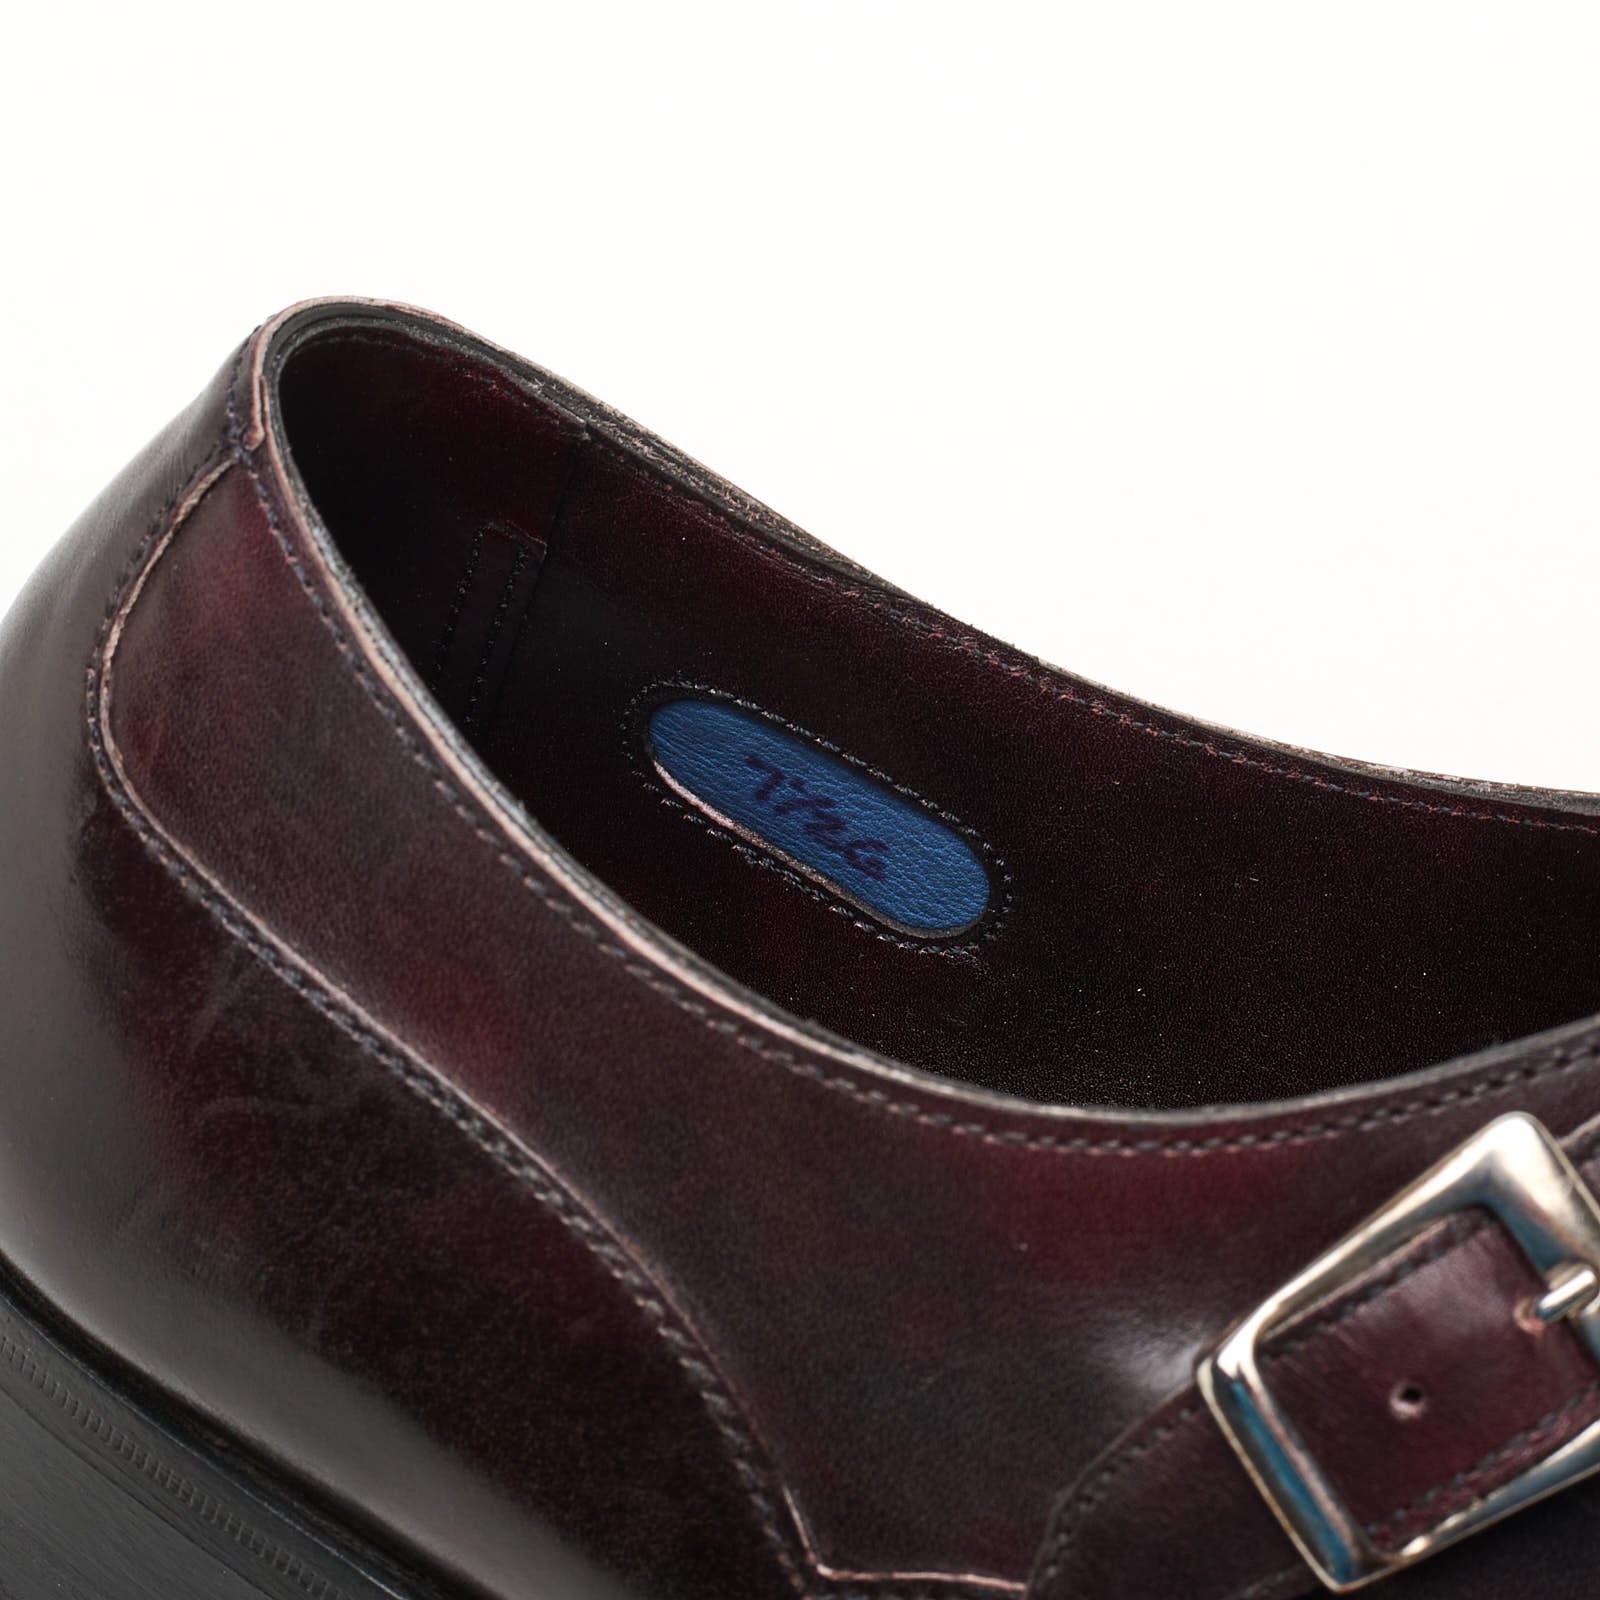 Anthony CLEVERLEY "Caine" Black Leather Double Monk Dress Shoes UK 7.5E US 8